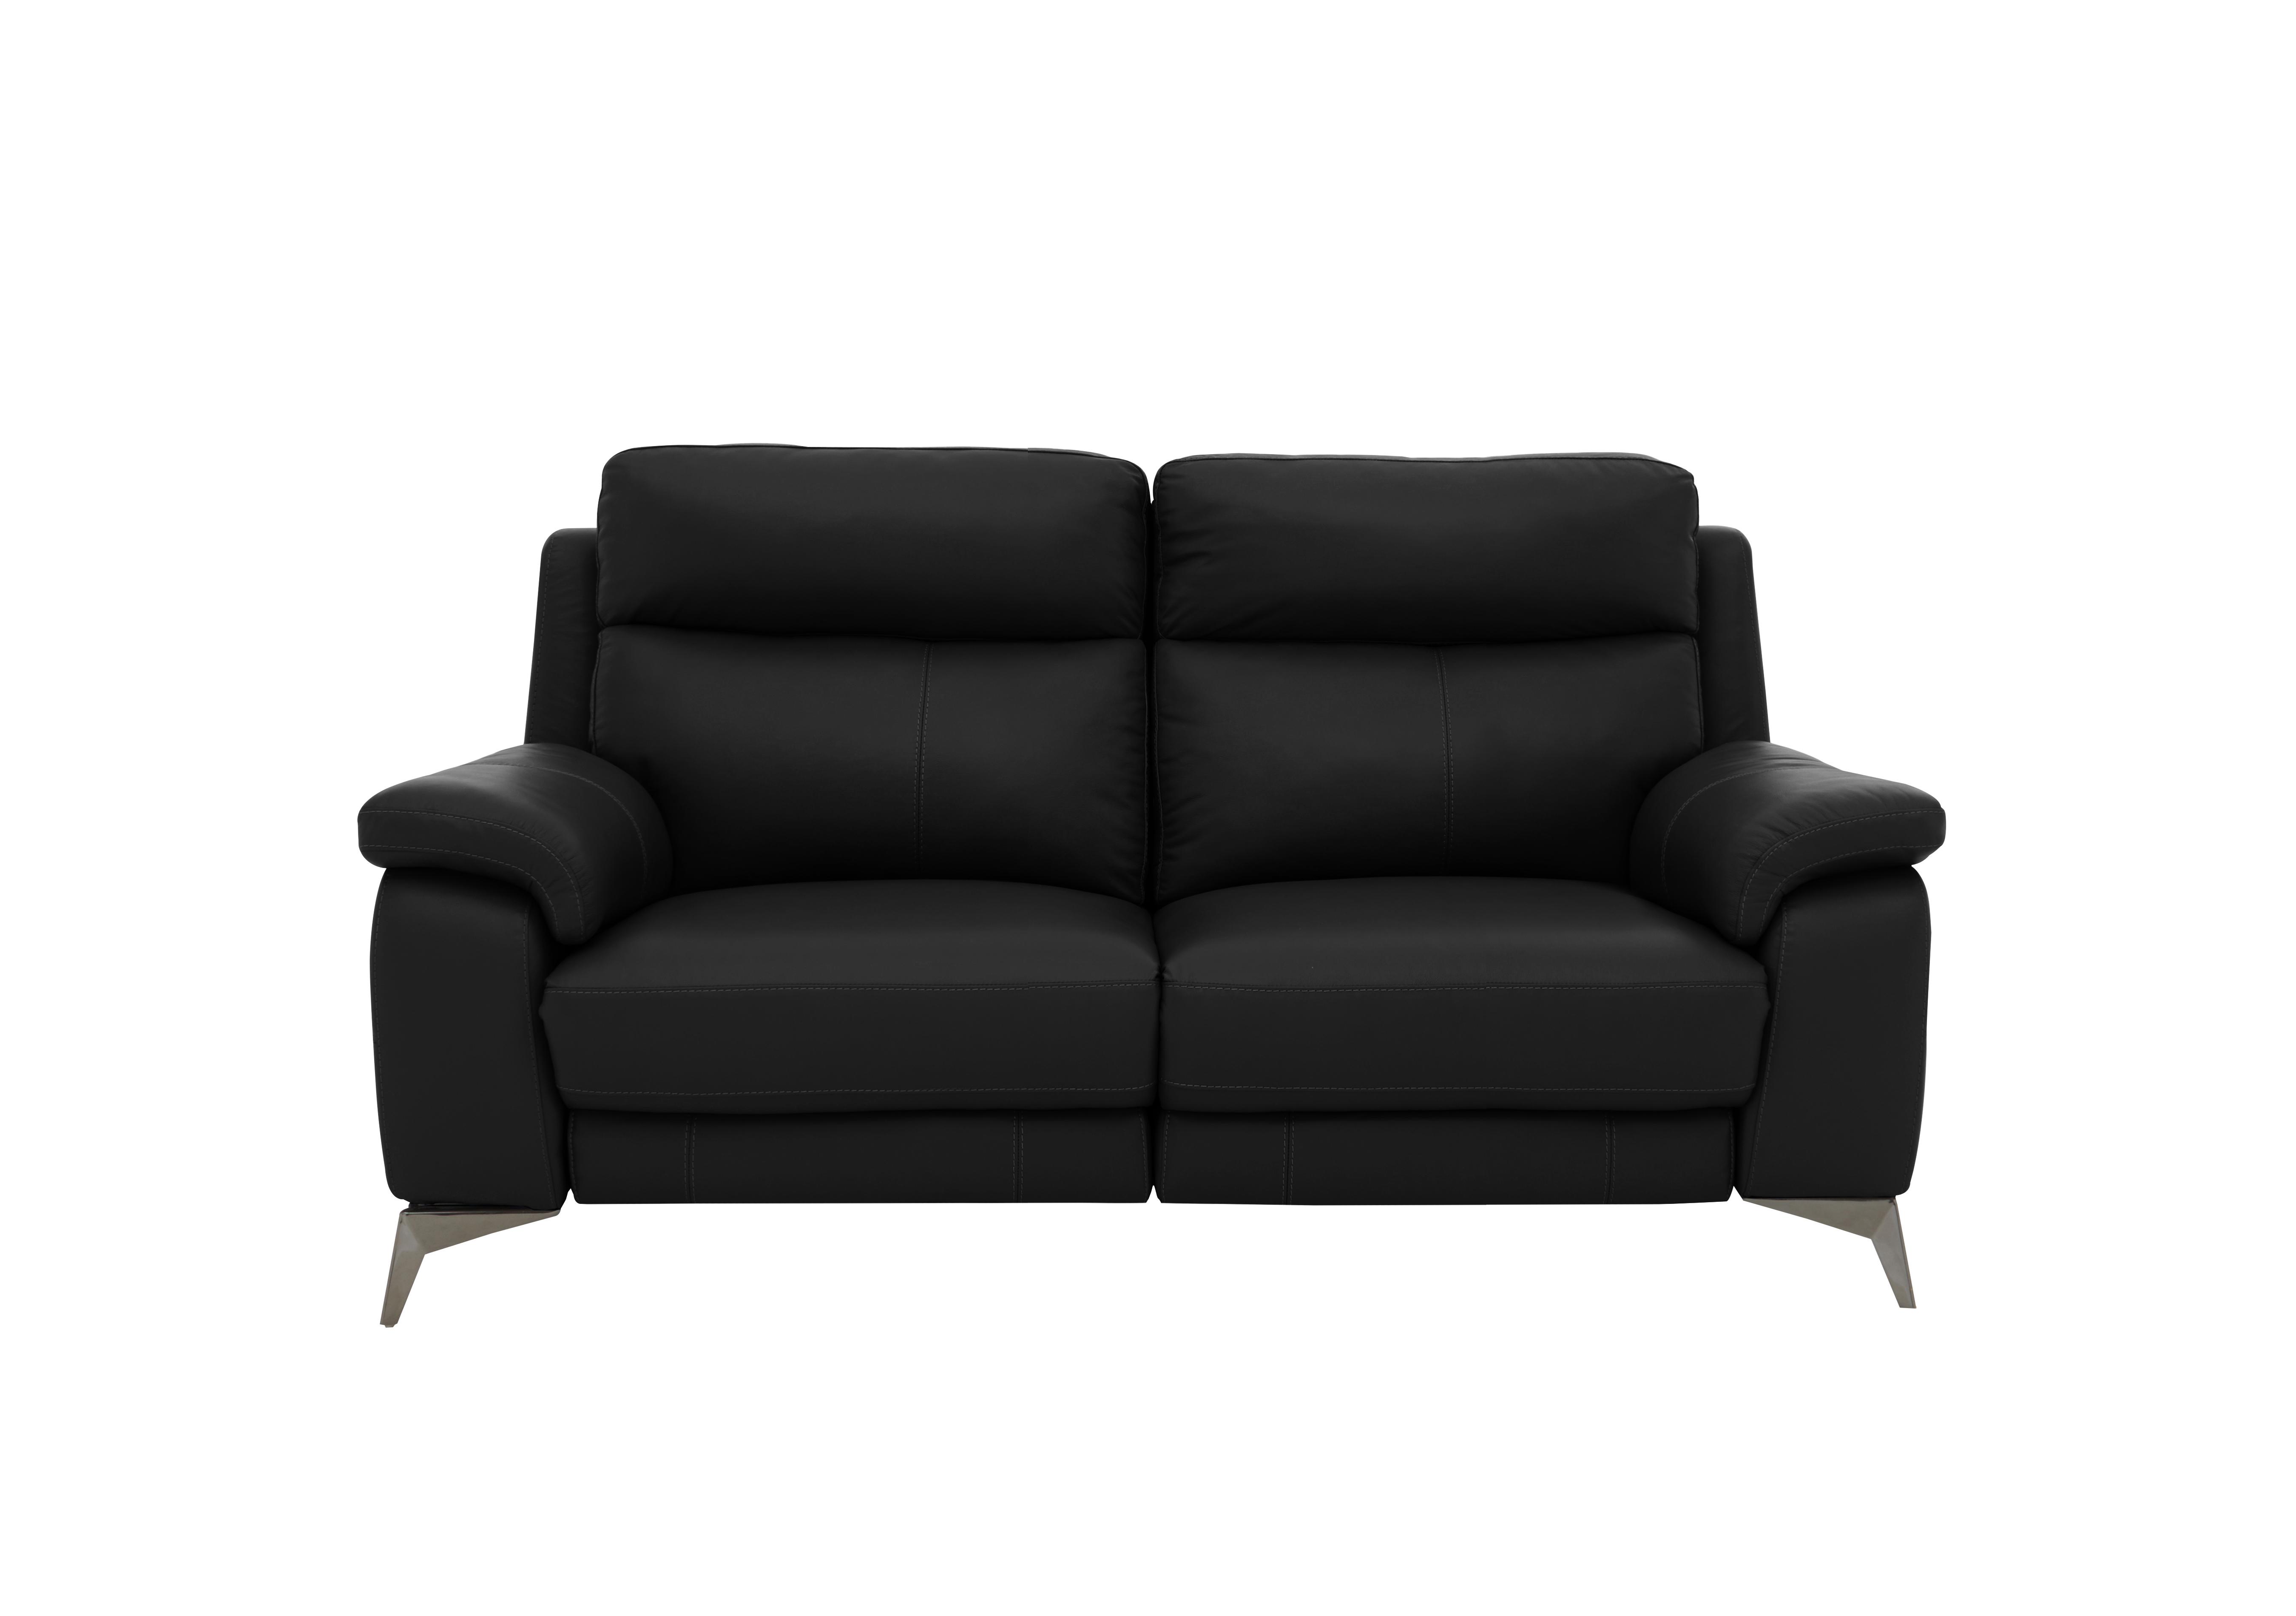 Missouri 2 Seater Leather Sofa in Bv-3500 Classic Black on Furniture Village